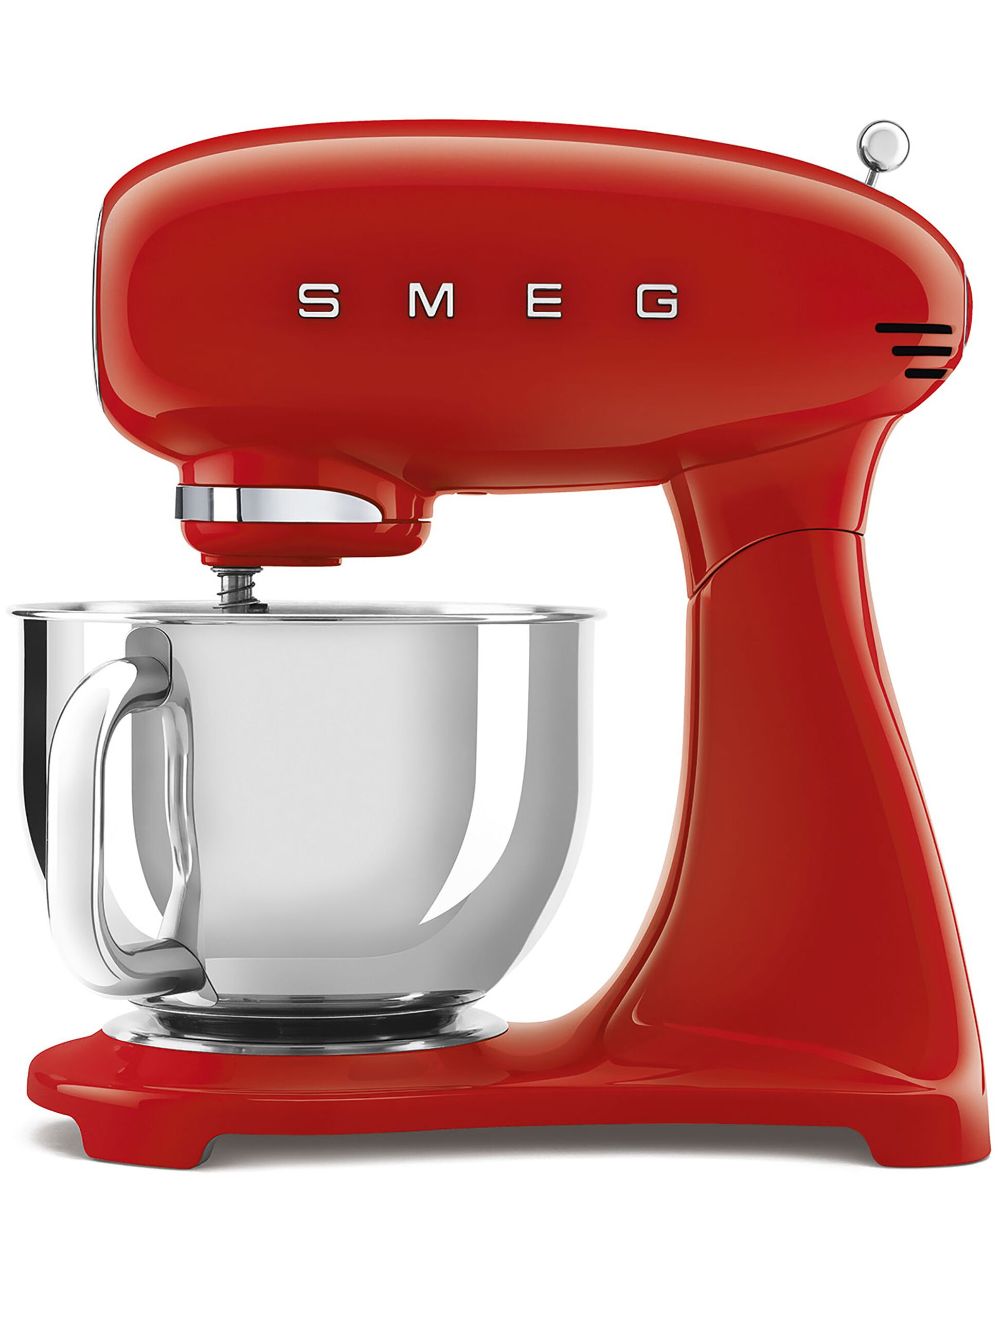 Smeg Estetica 50's Style Mixer In Red